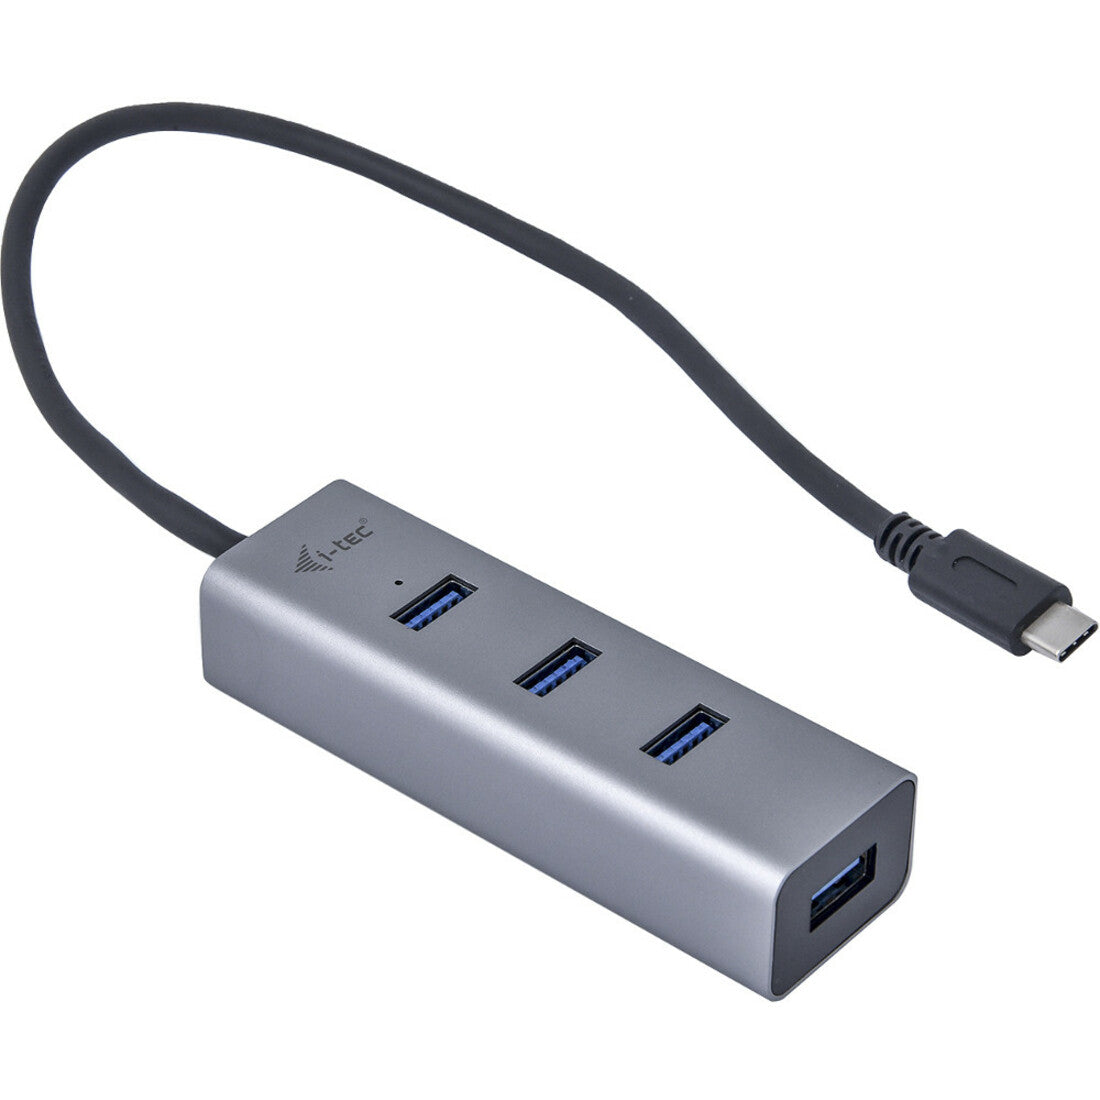 i-tec C31HUBMETAL403 USB-C Metal HUB 4 Port, Compact and Versatile USB Hub for Easy Connectivity